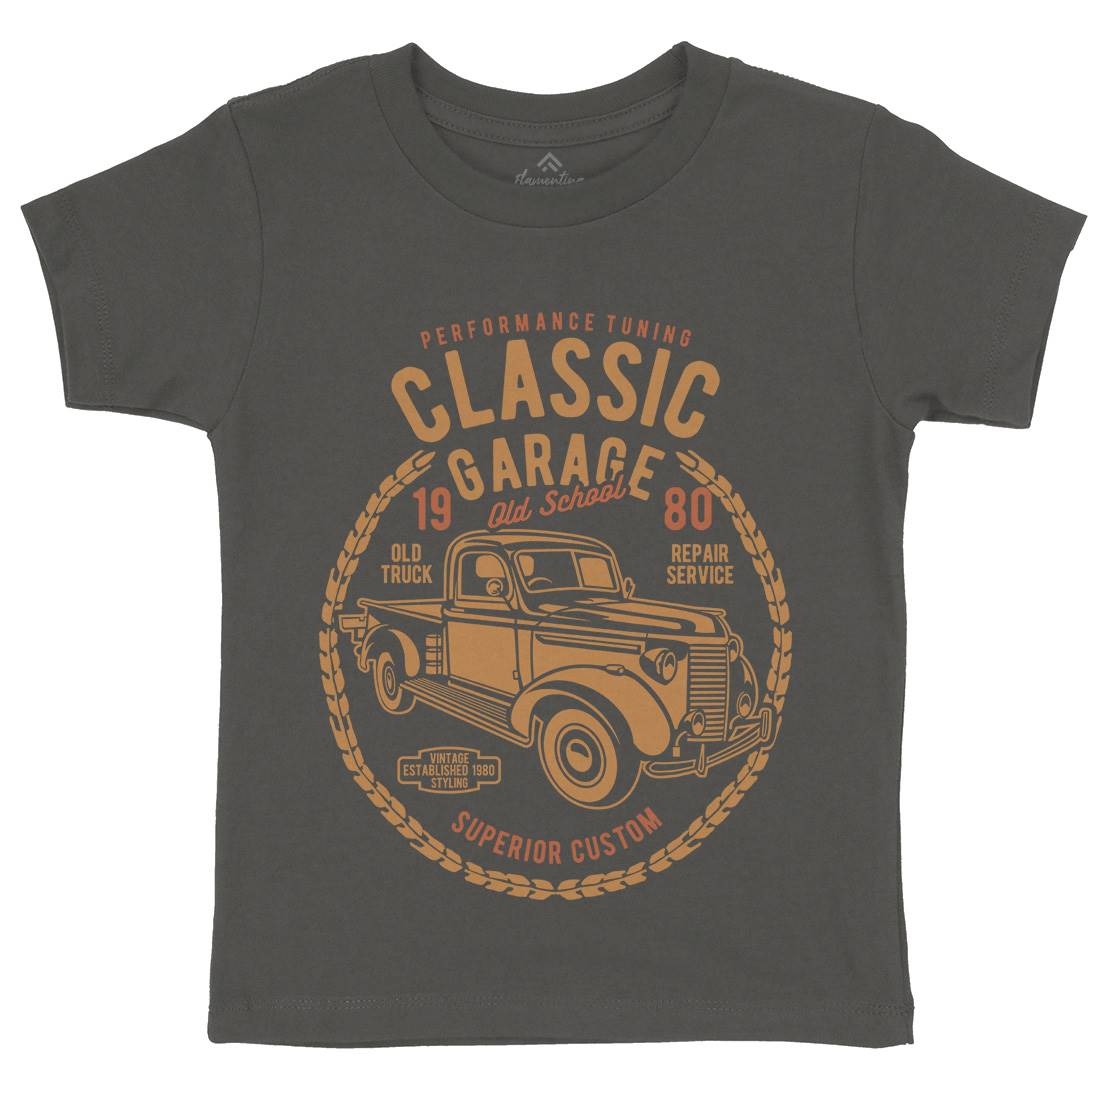 Classic Garage Kids Crew Neck T-Shirt Cars B194